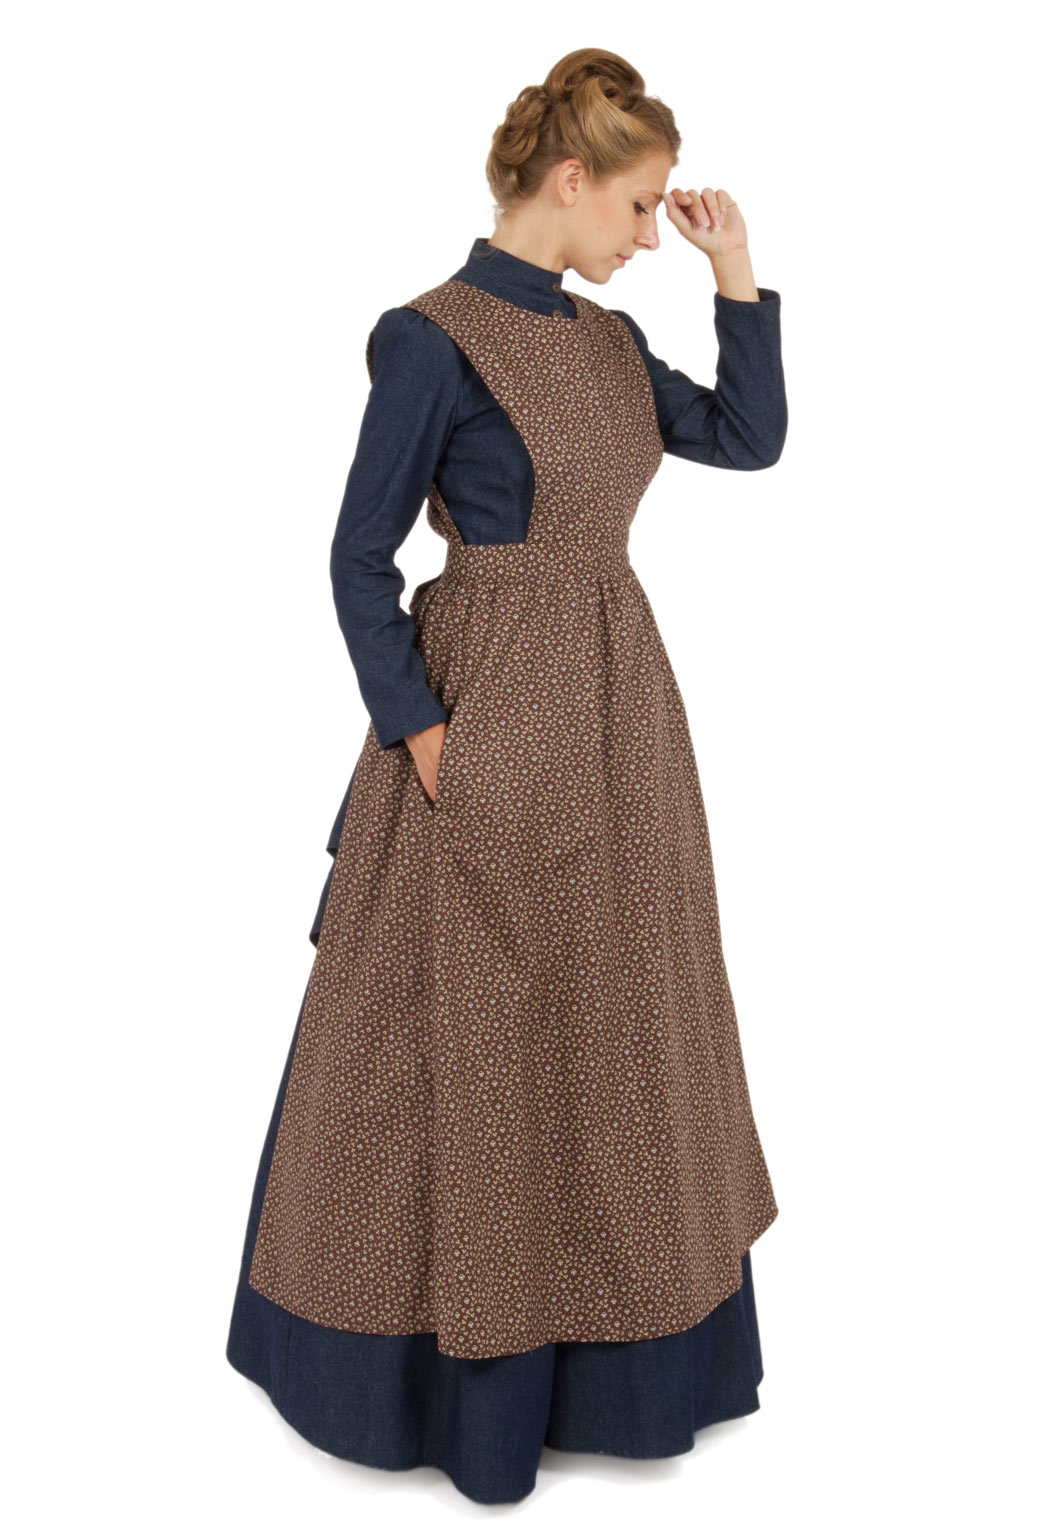 historical pioneer dress